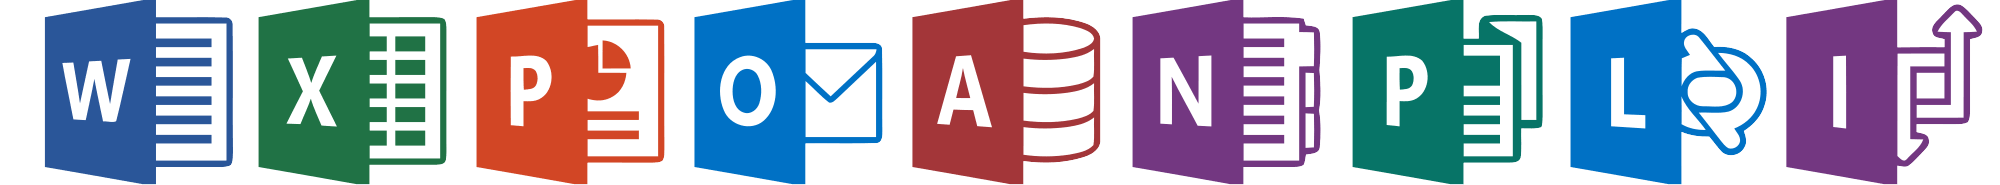 Office 365 2013 Logo - File:Microsoft Office 2013 logos lineup.svg - Wikimedia Commons